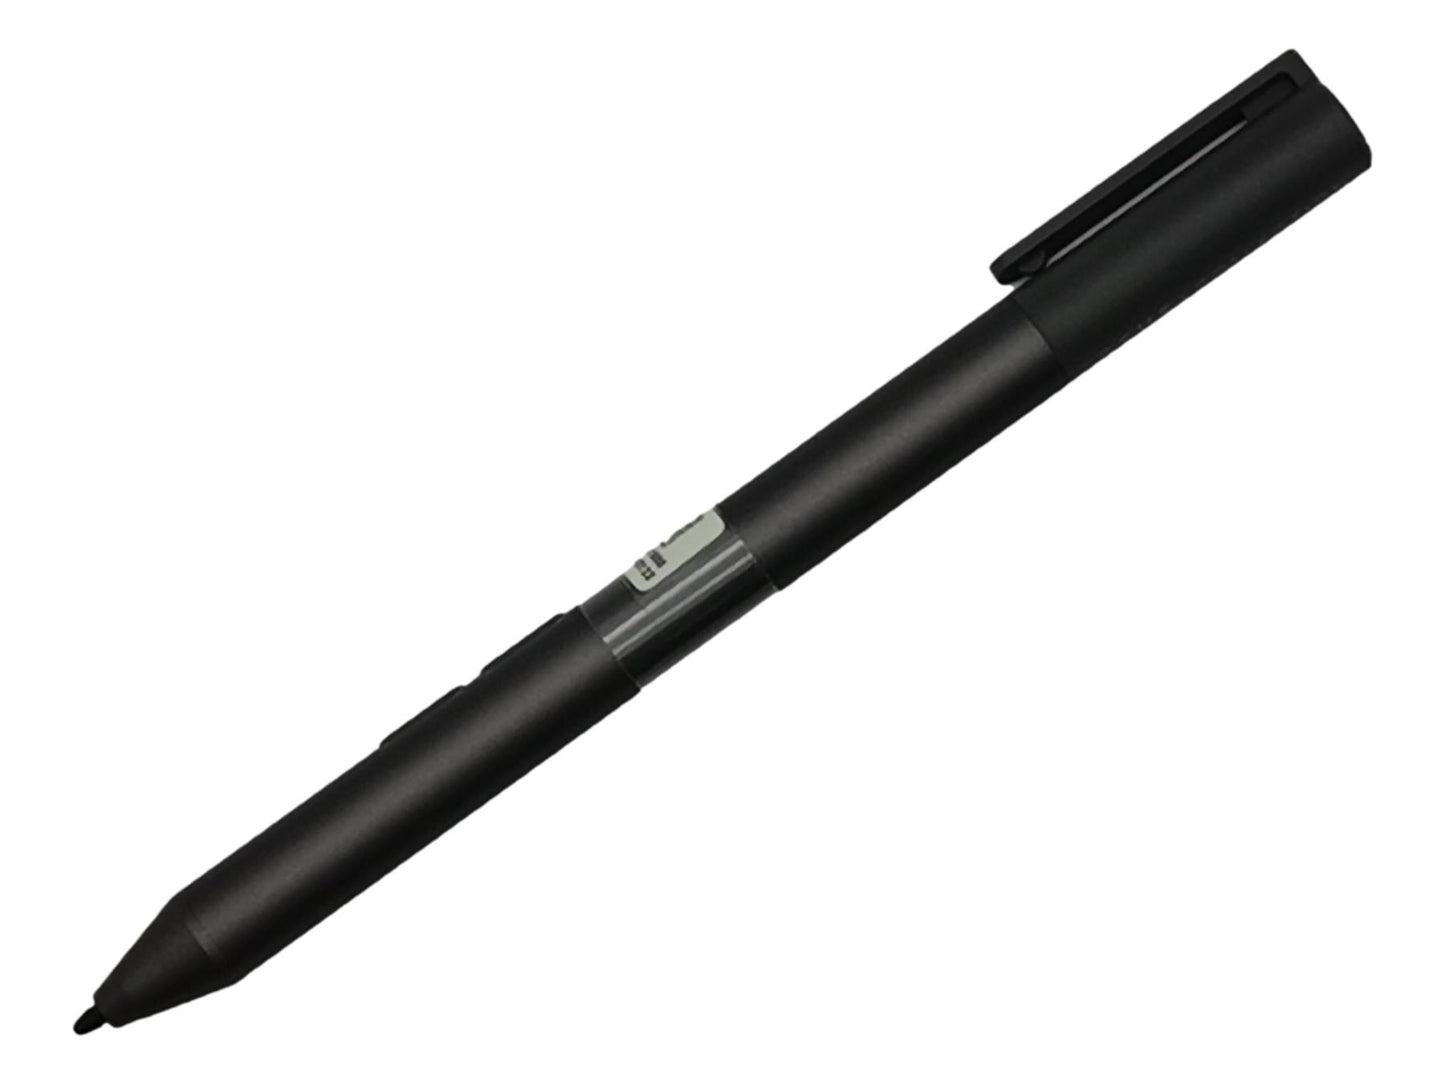 Asus Ux461 Stylus 1C Pen (Black) 04190-00160000 04190-00180100